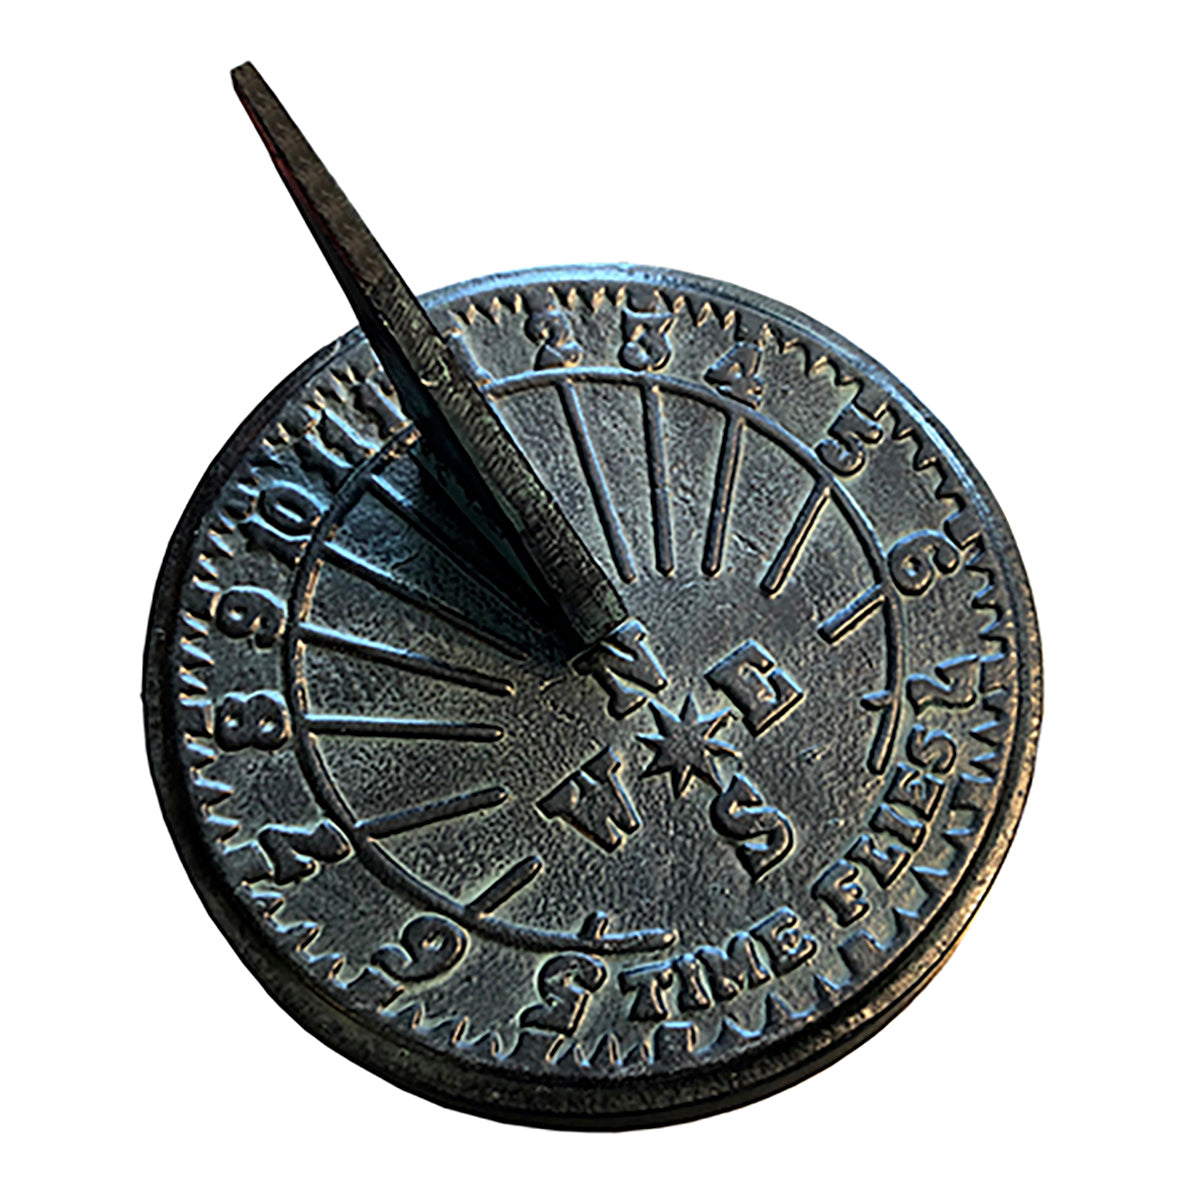 Cast Iron Numbers Sundial, 9 7/8" dia ROME #2520